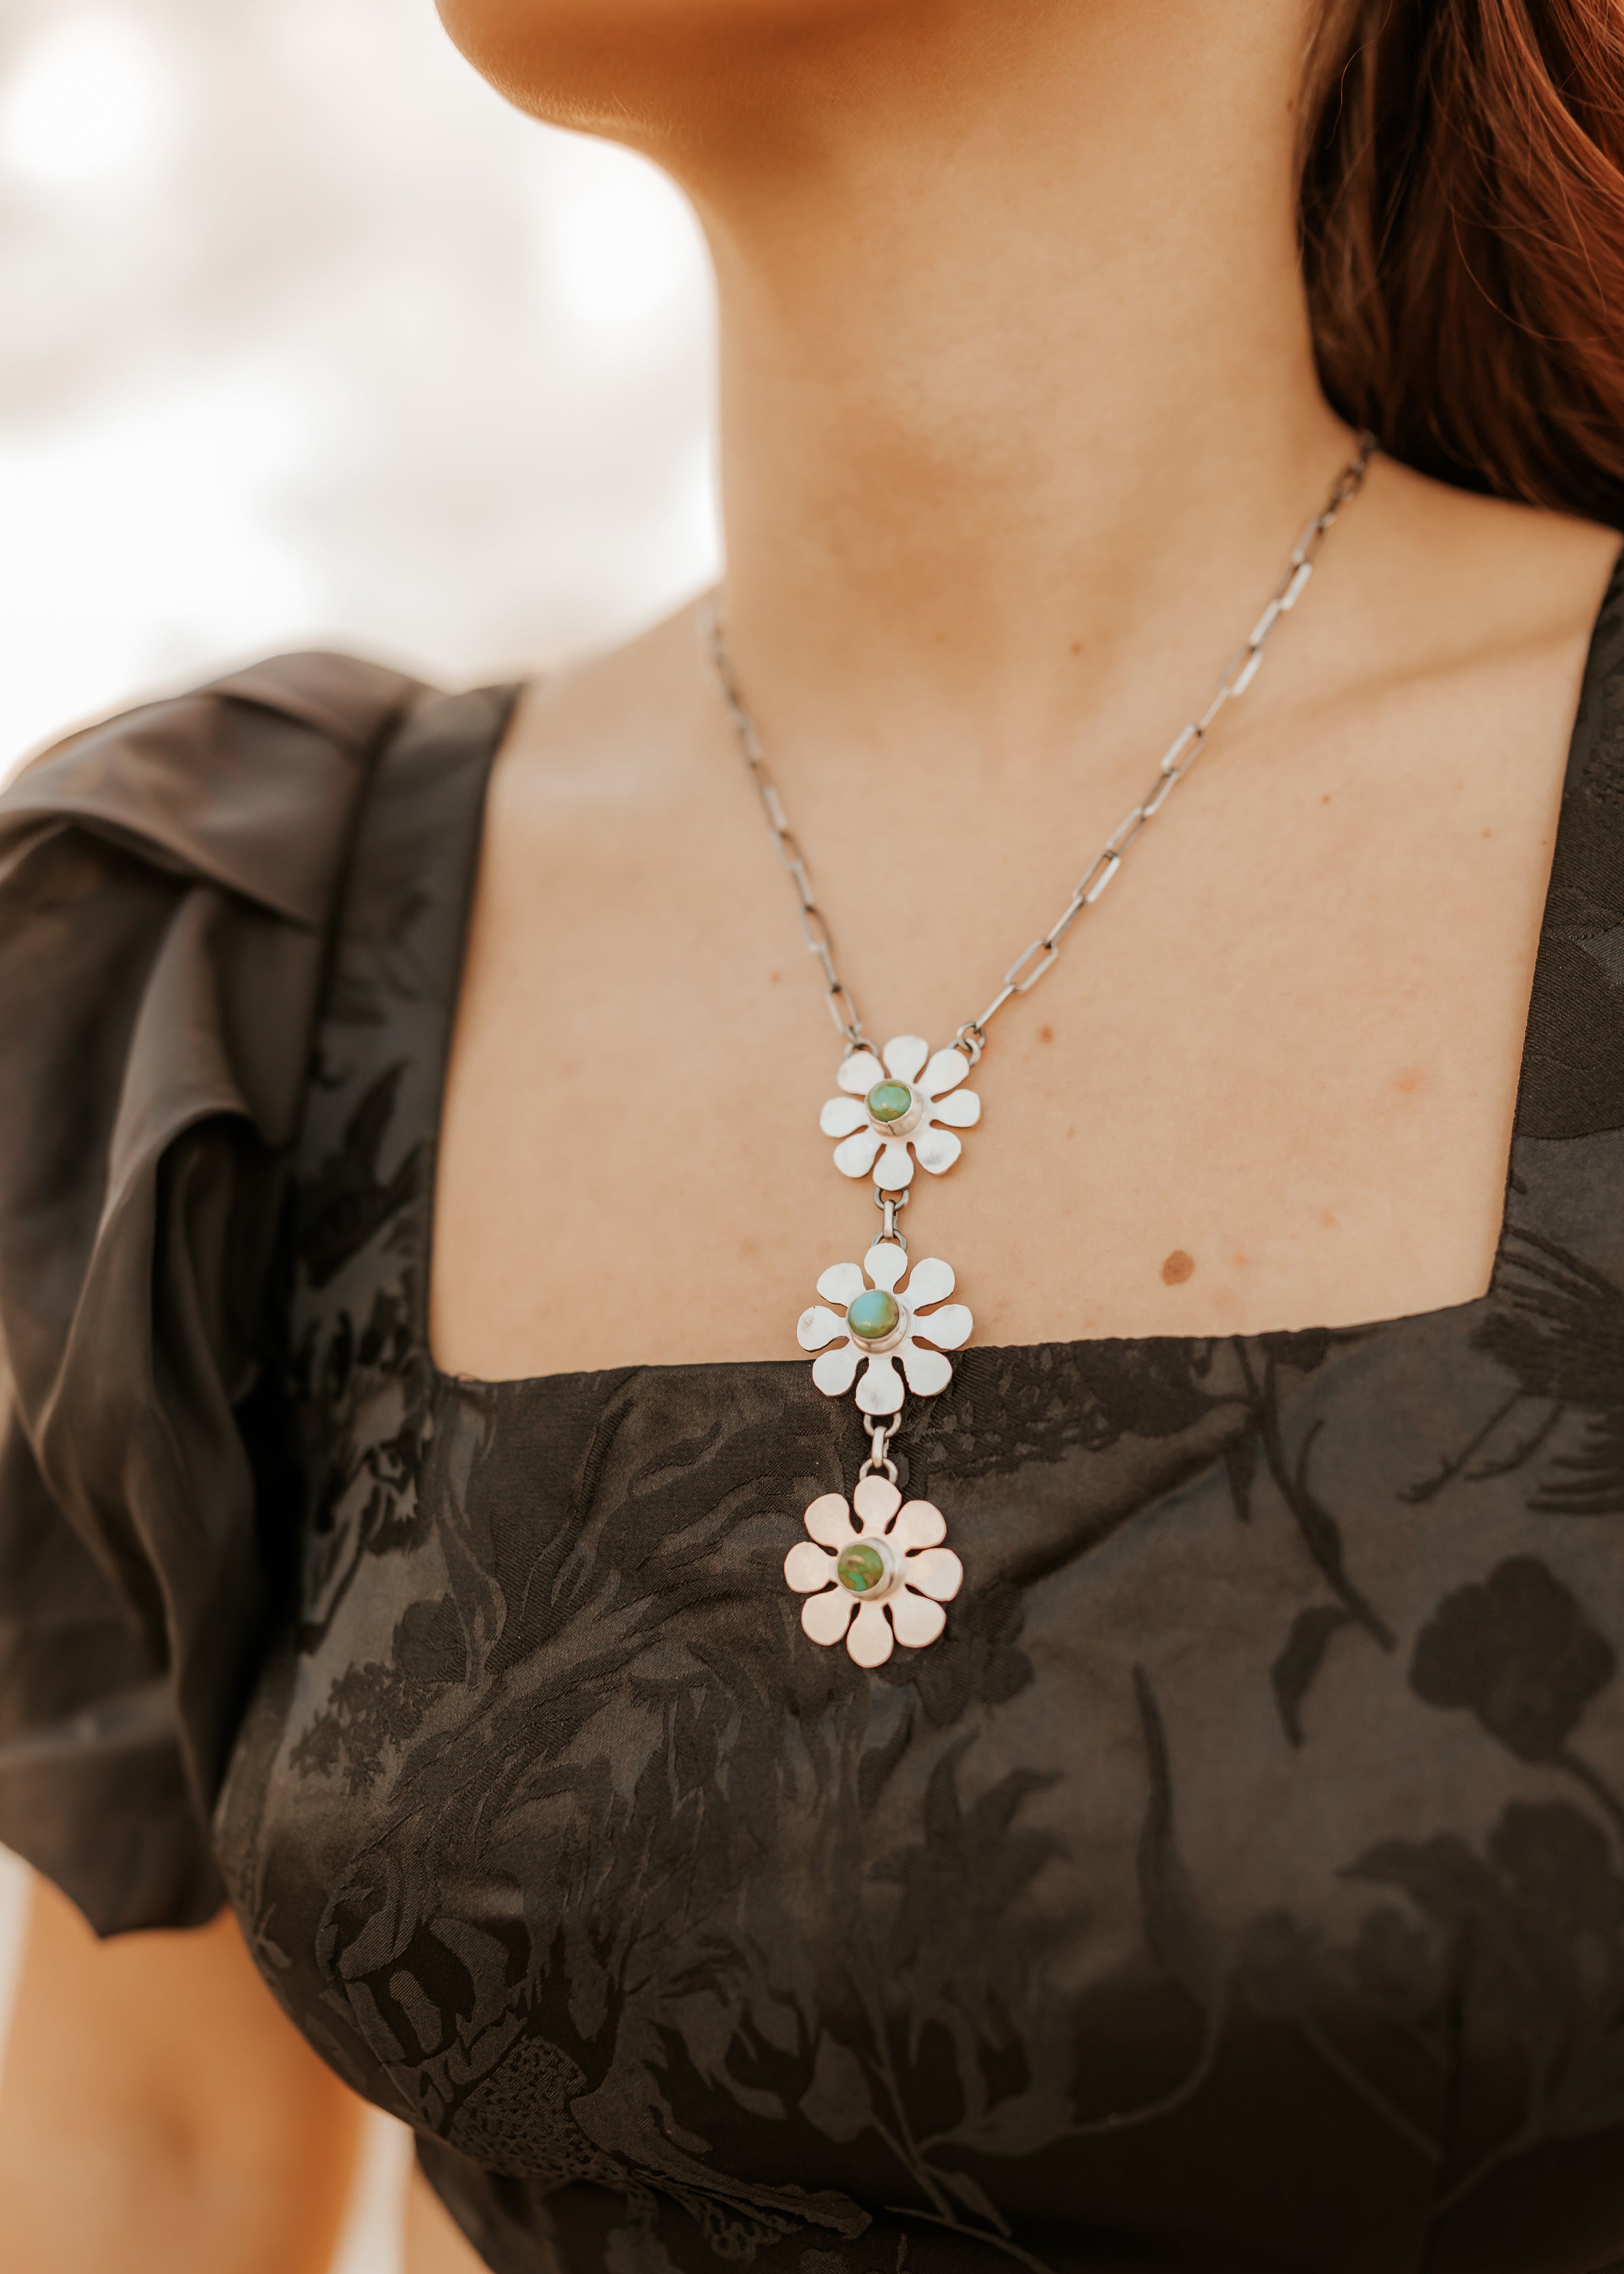 The Celosia Necklace